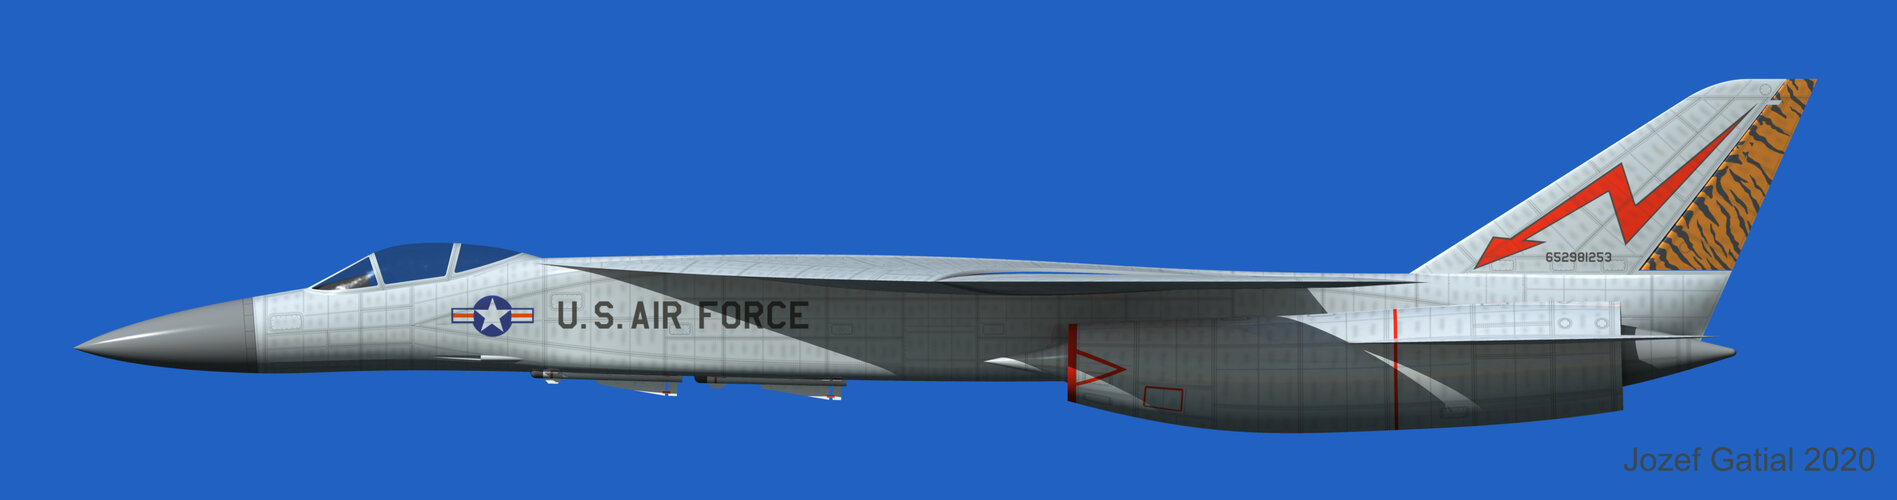 Lockheed CL-1000 side.jpg